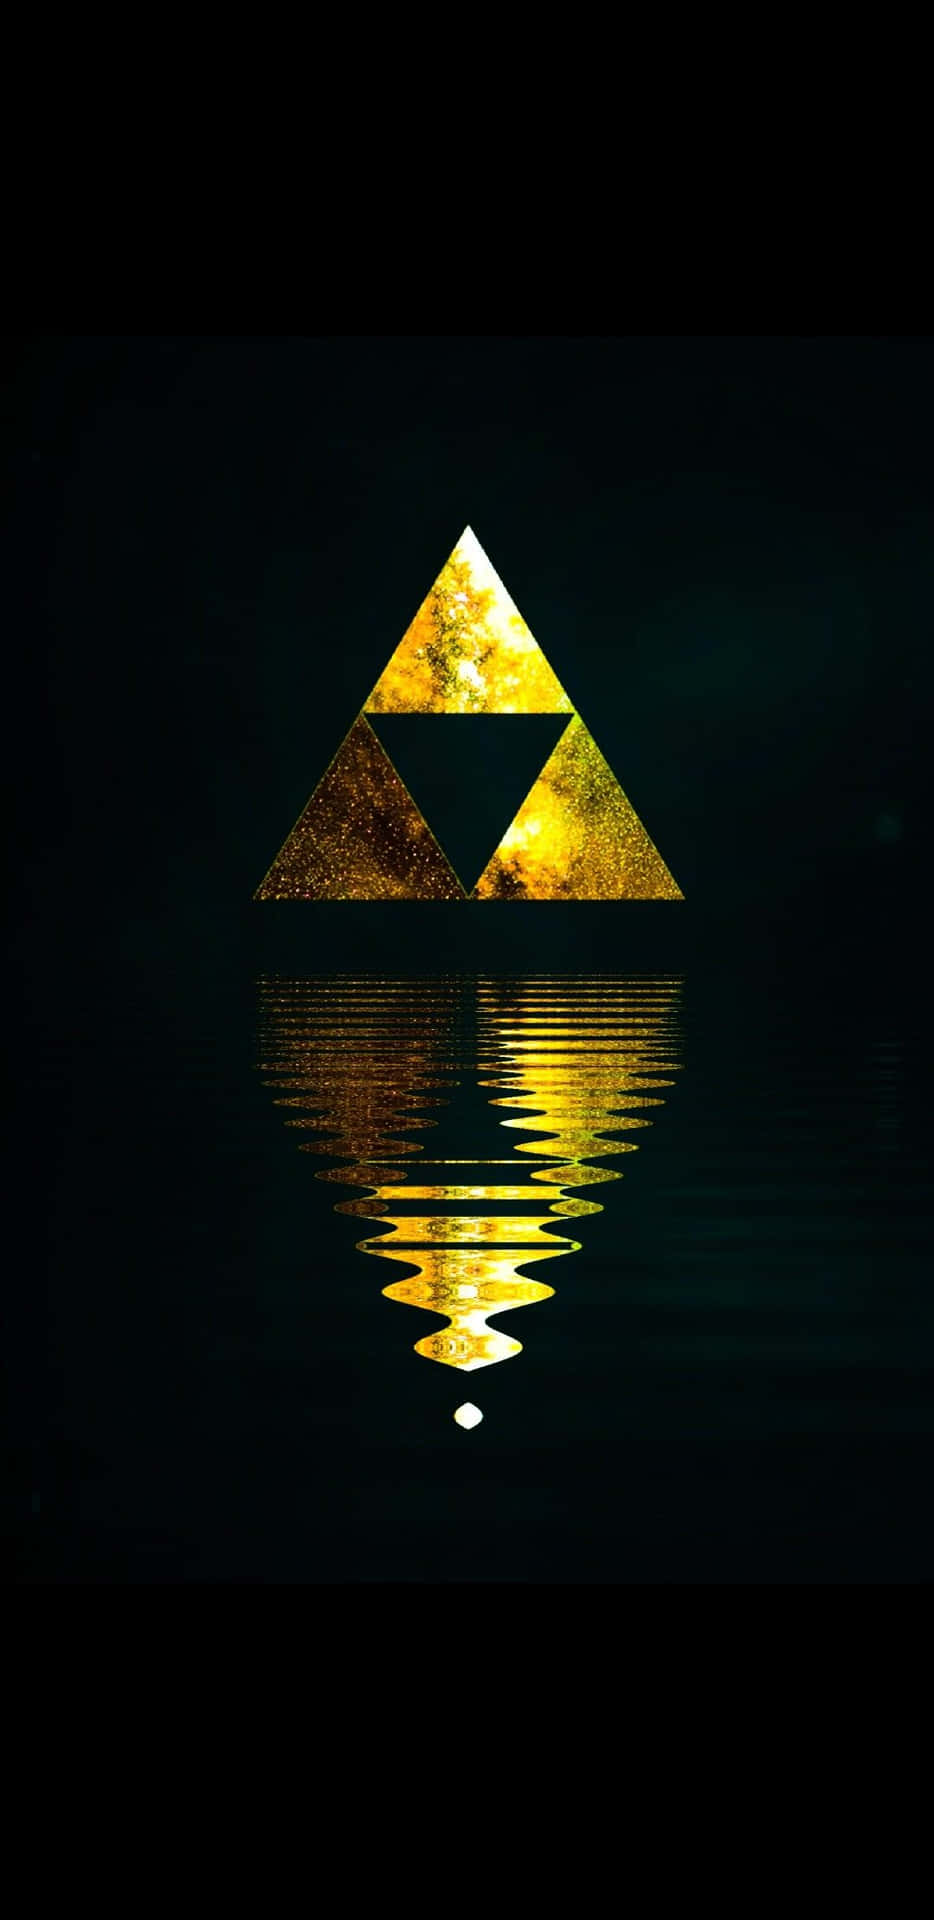 Download Triforce From Zelda Cool Logos Wallpaper | Wallpapers.com